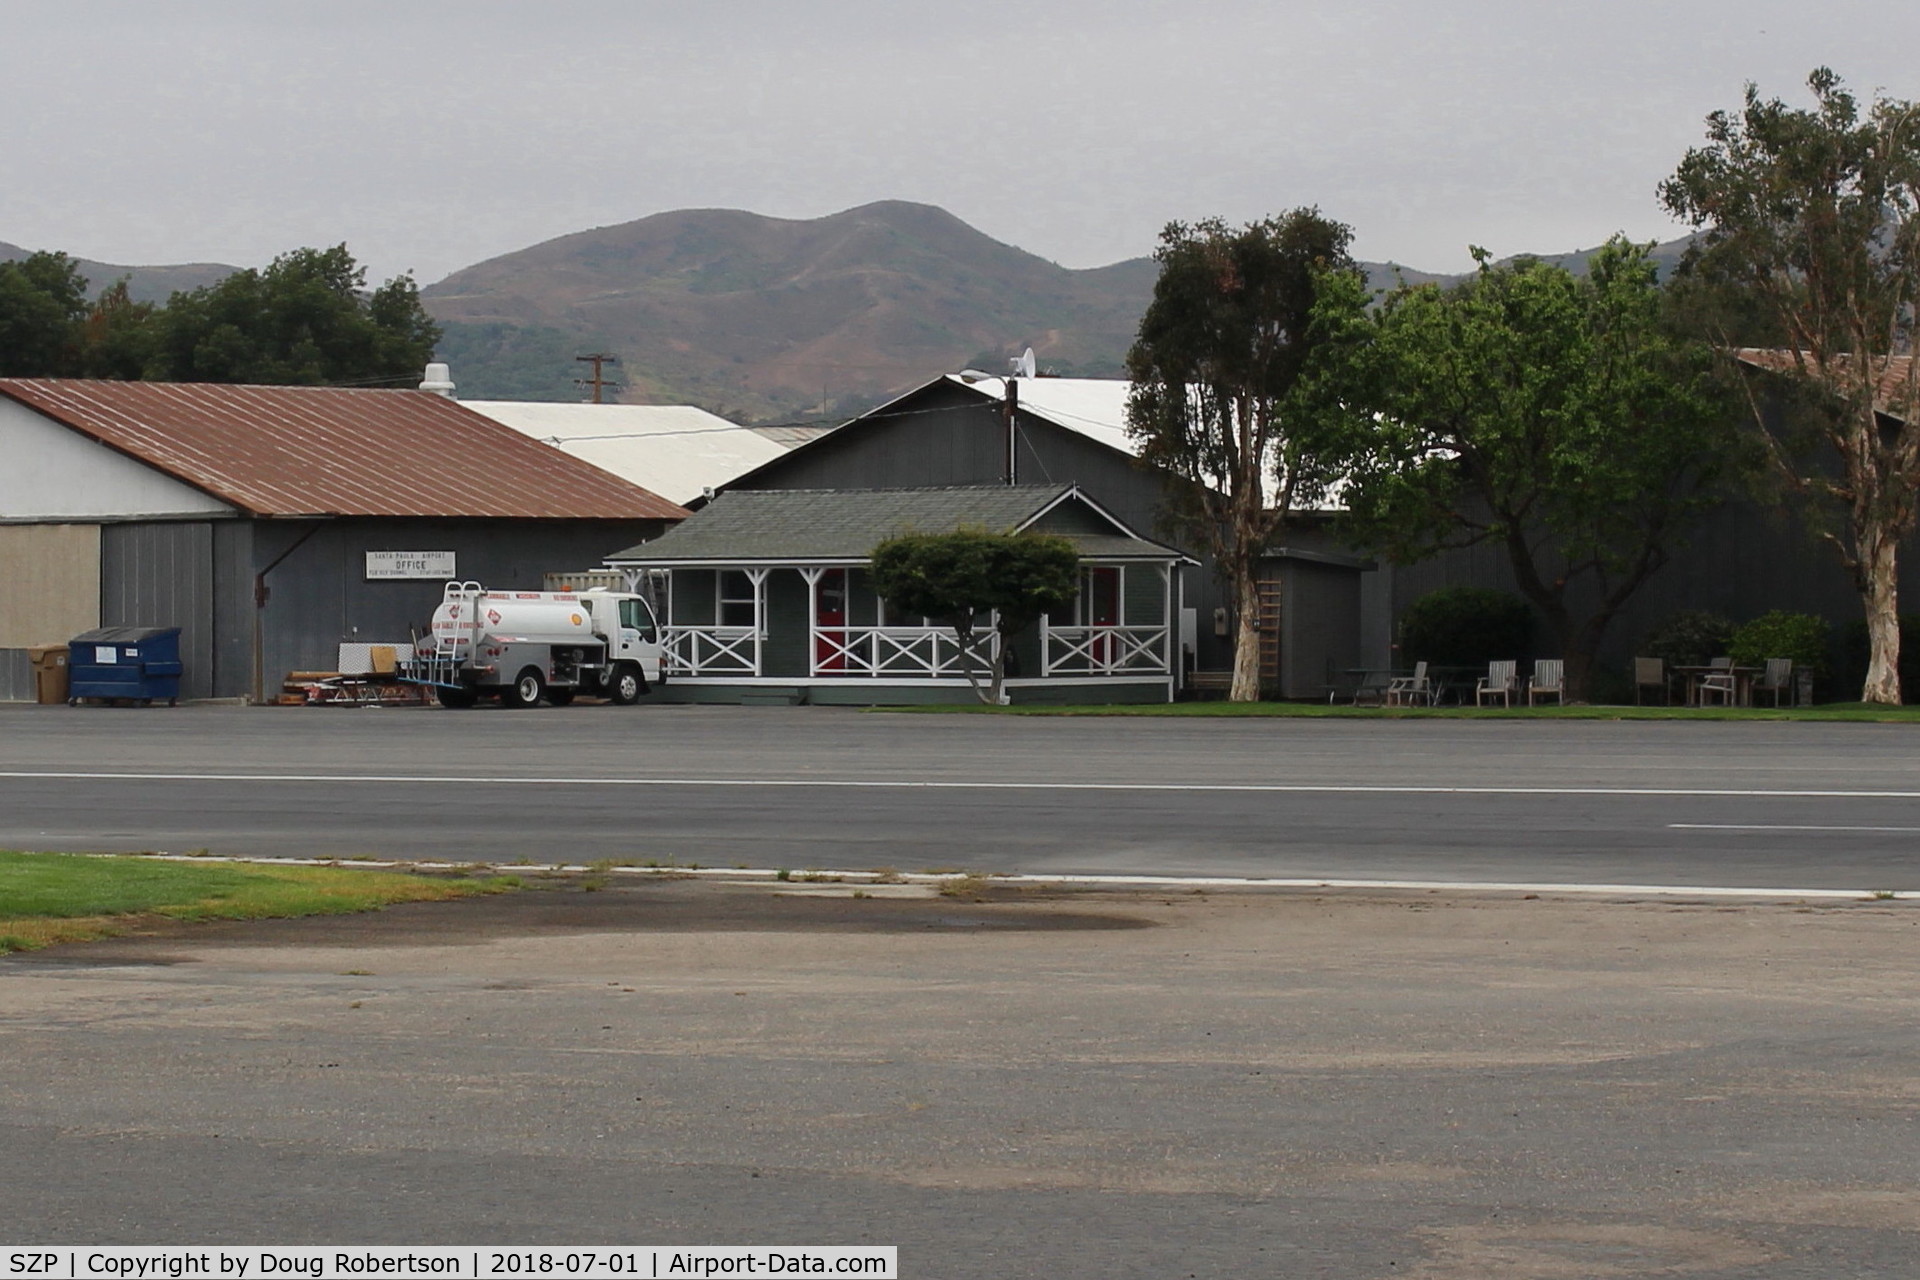 Santa Paula Airport (SZP) - The SZP Airport Office rehab is complete!

